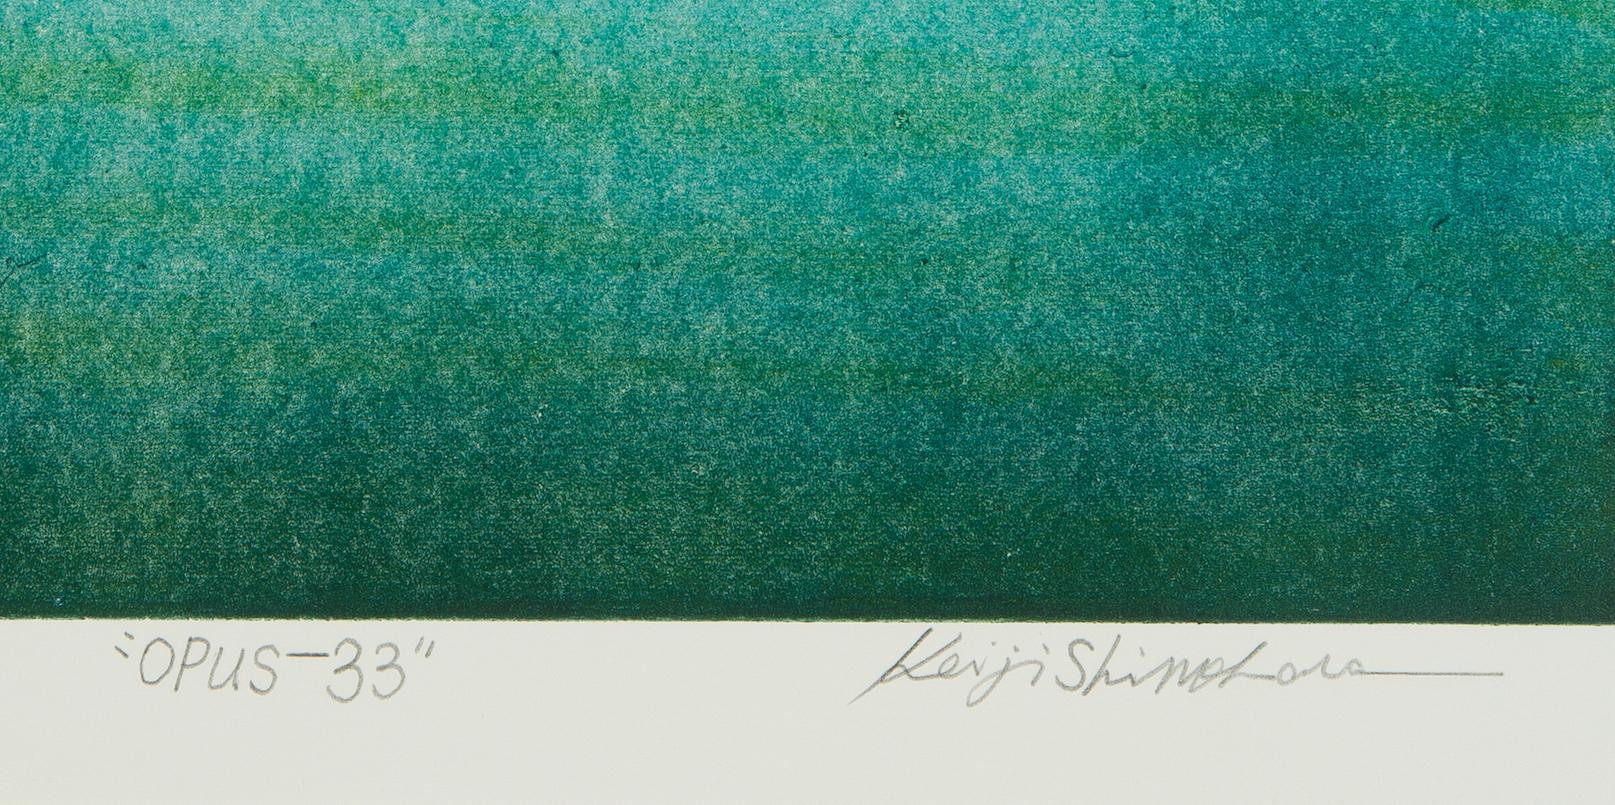 Keiji Shinohara, Opus 33, impressionist landscape monoprint, 2016 1